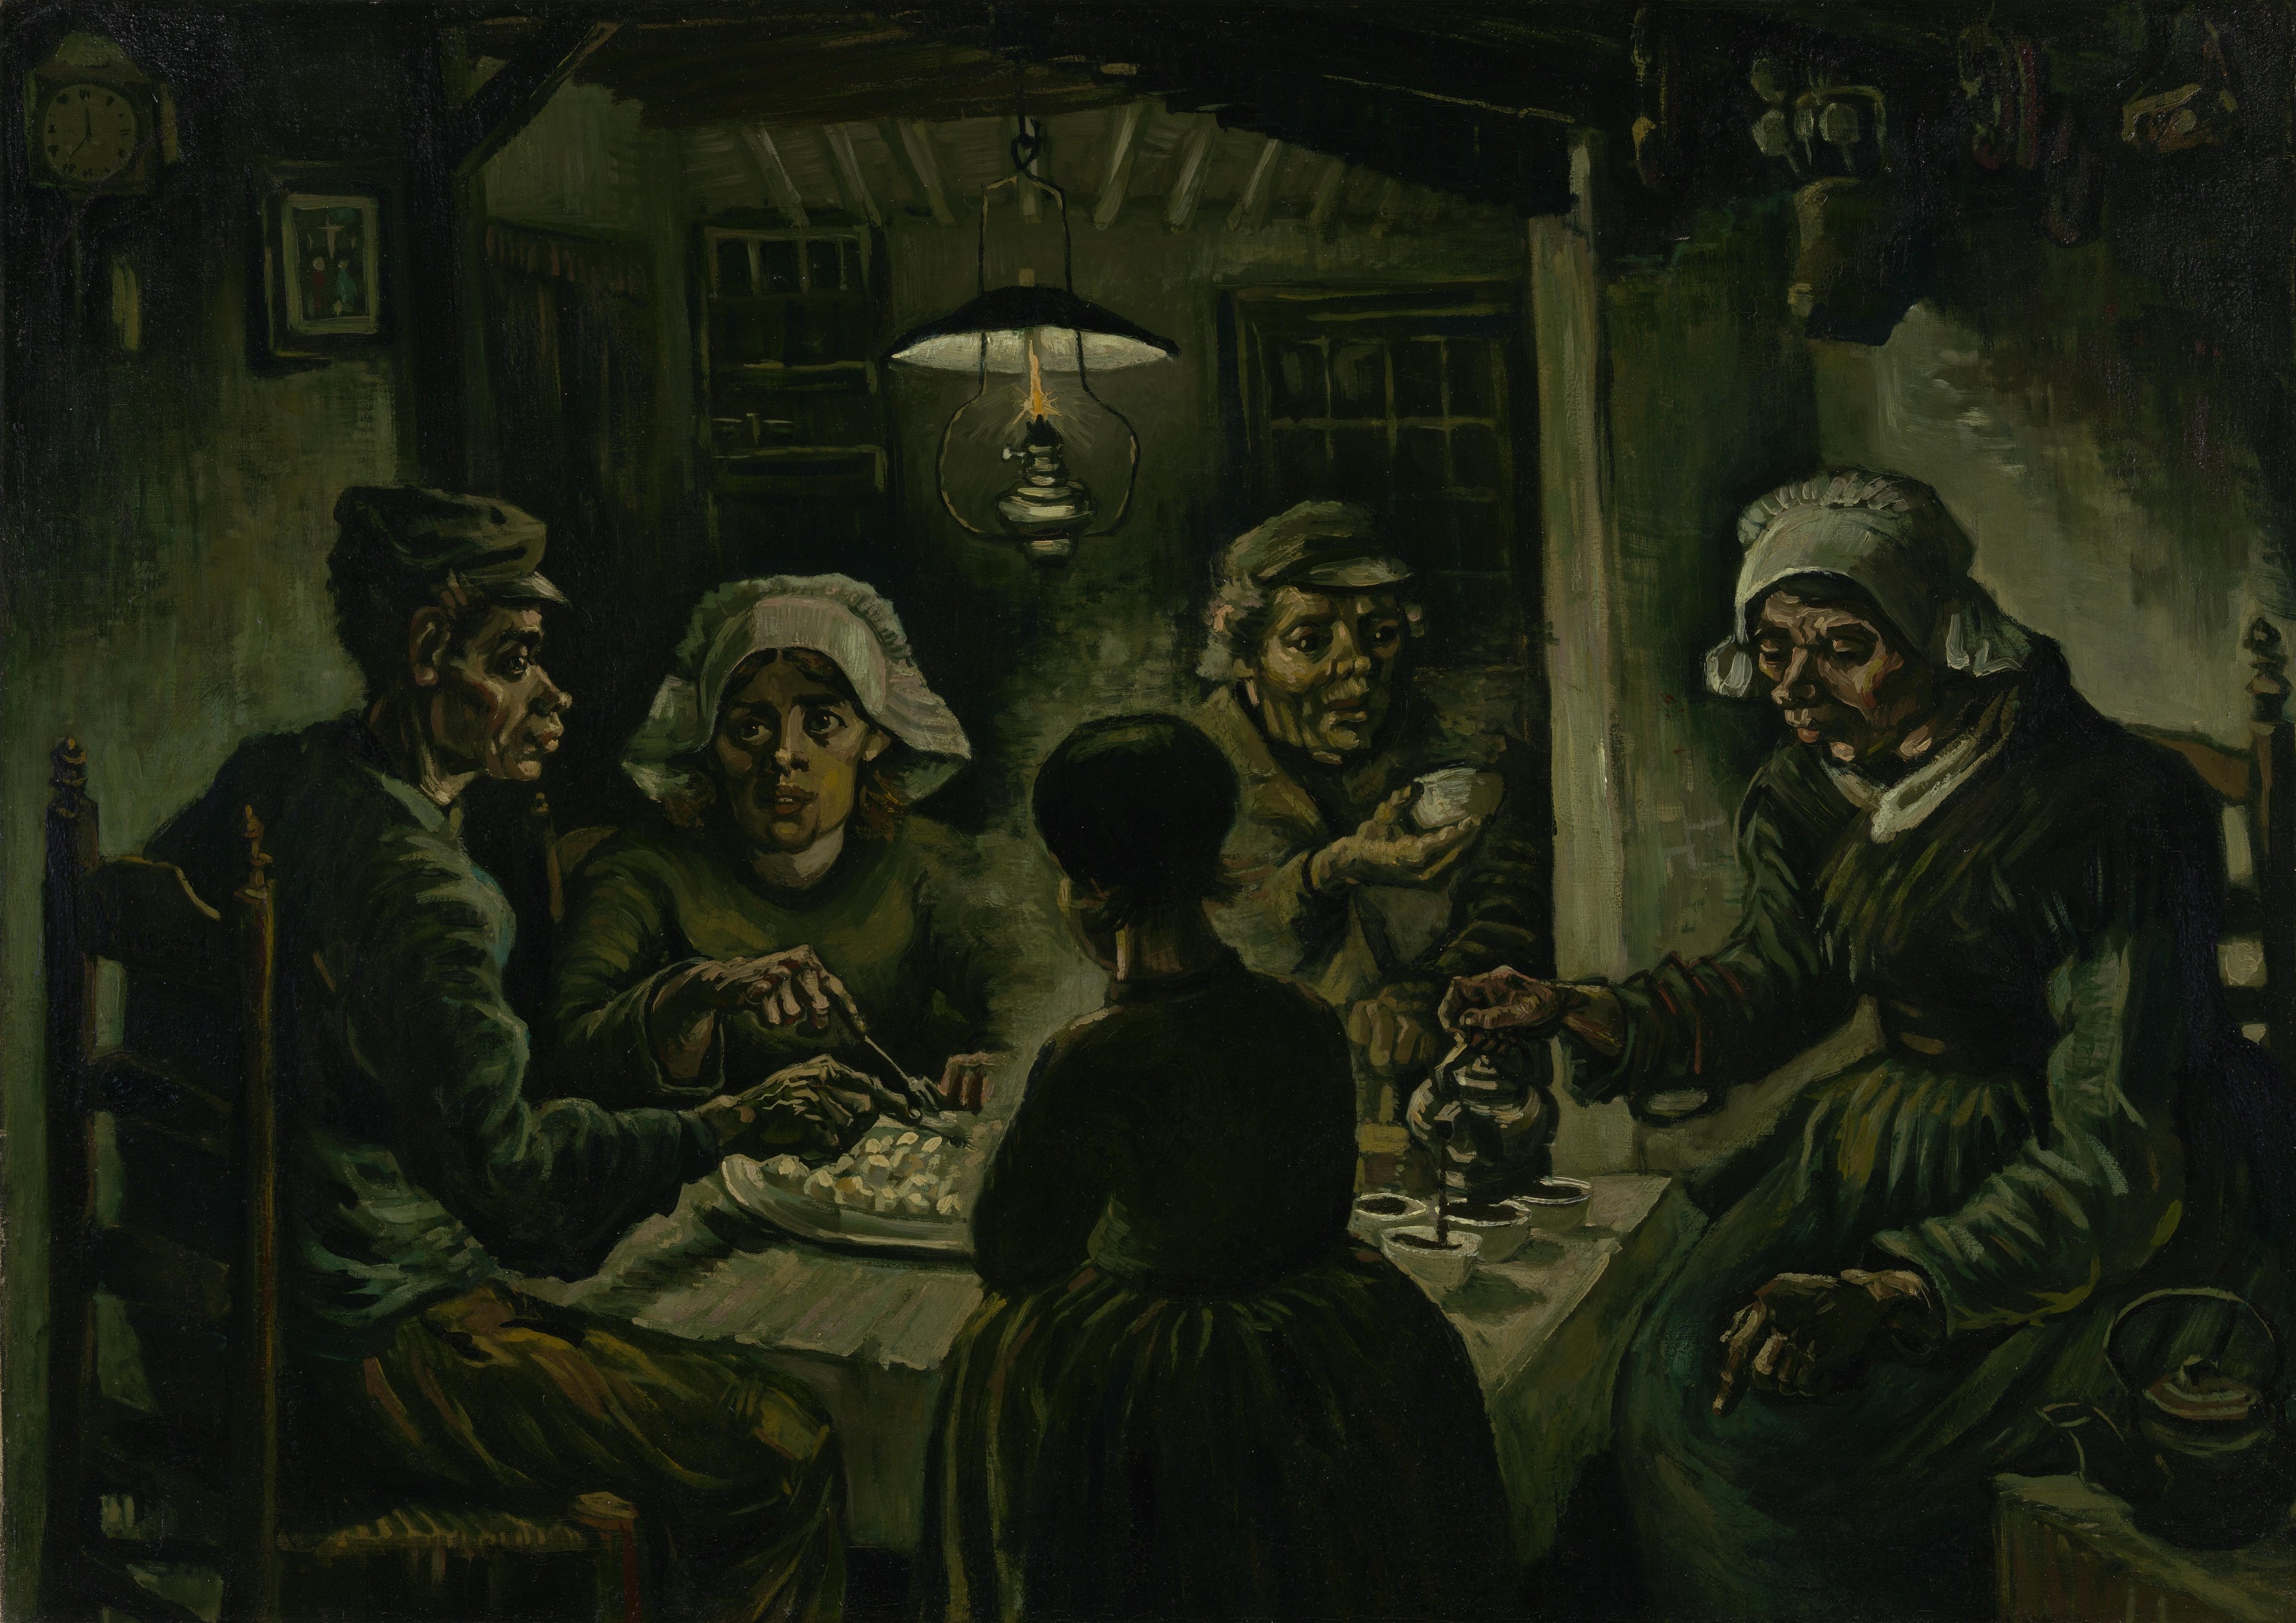 Resim 3: Patates Yiyenler, Van Gogh